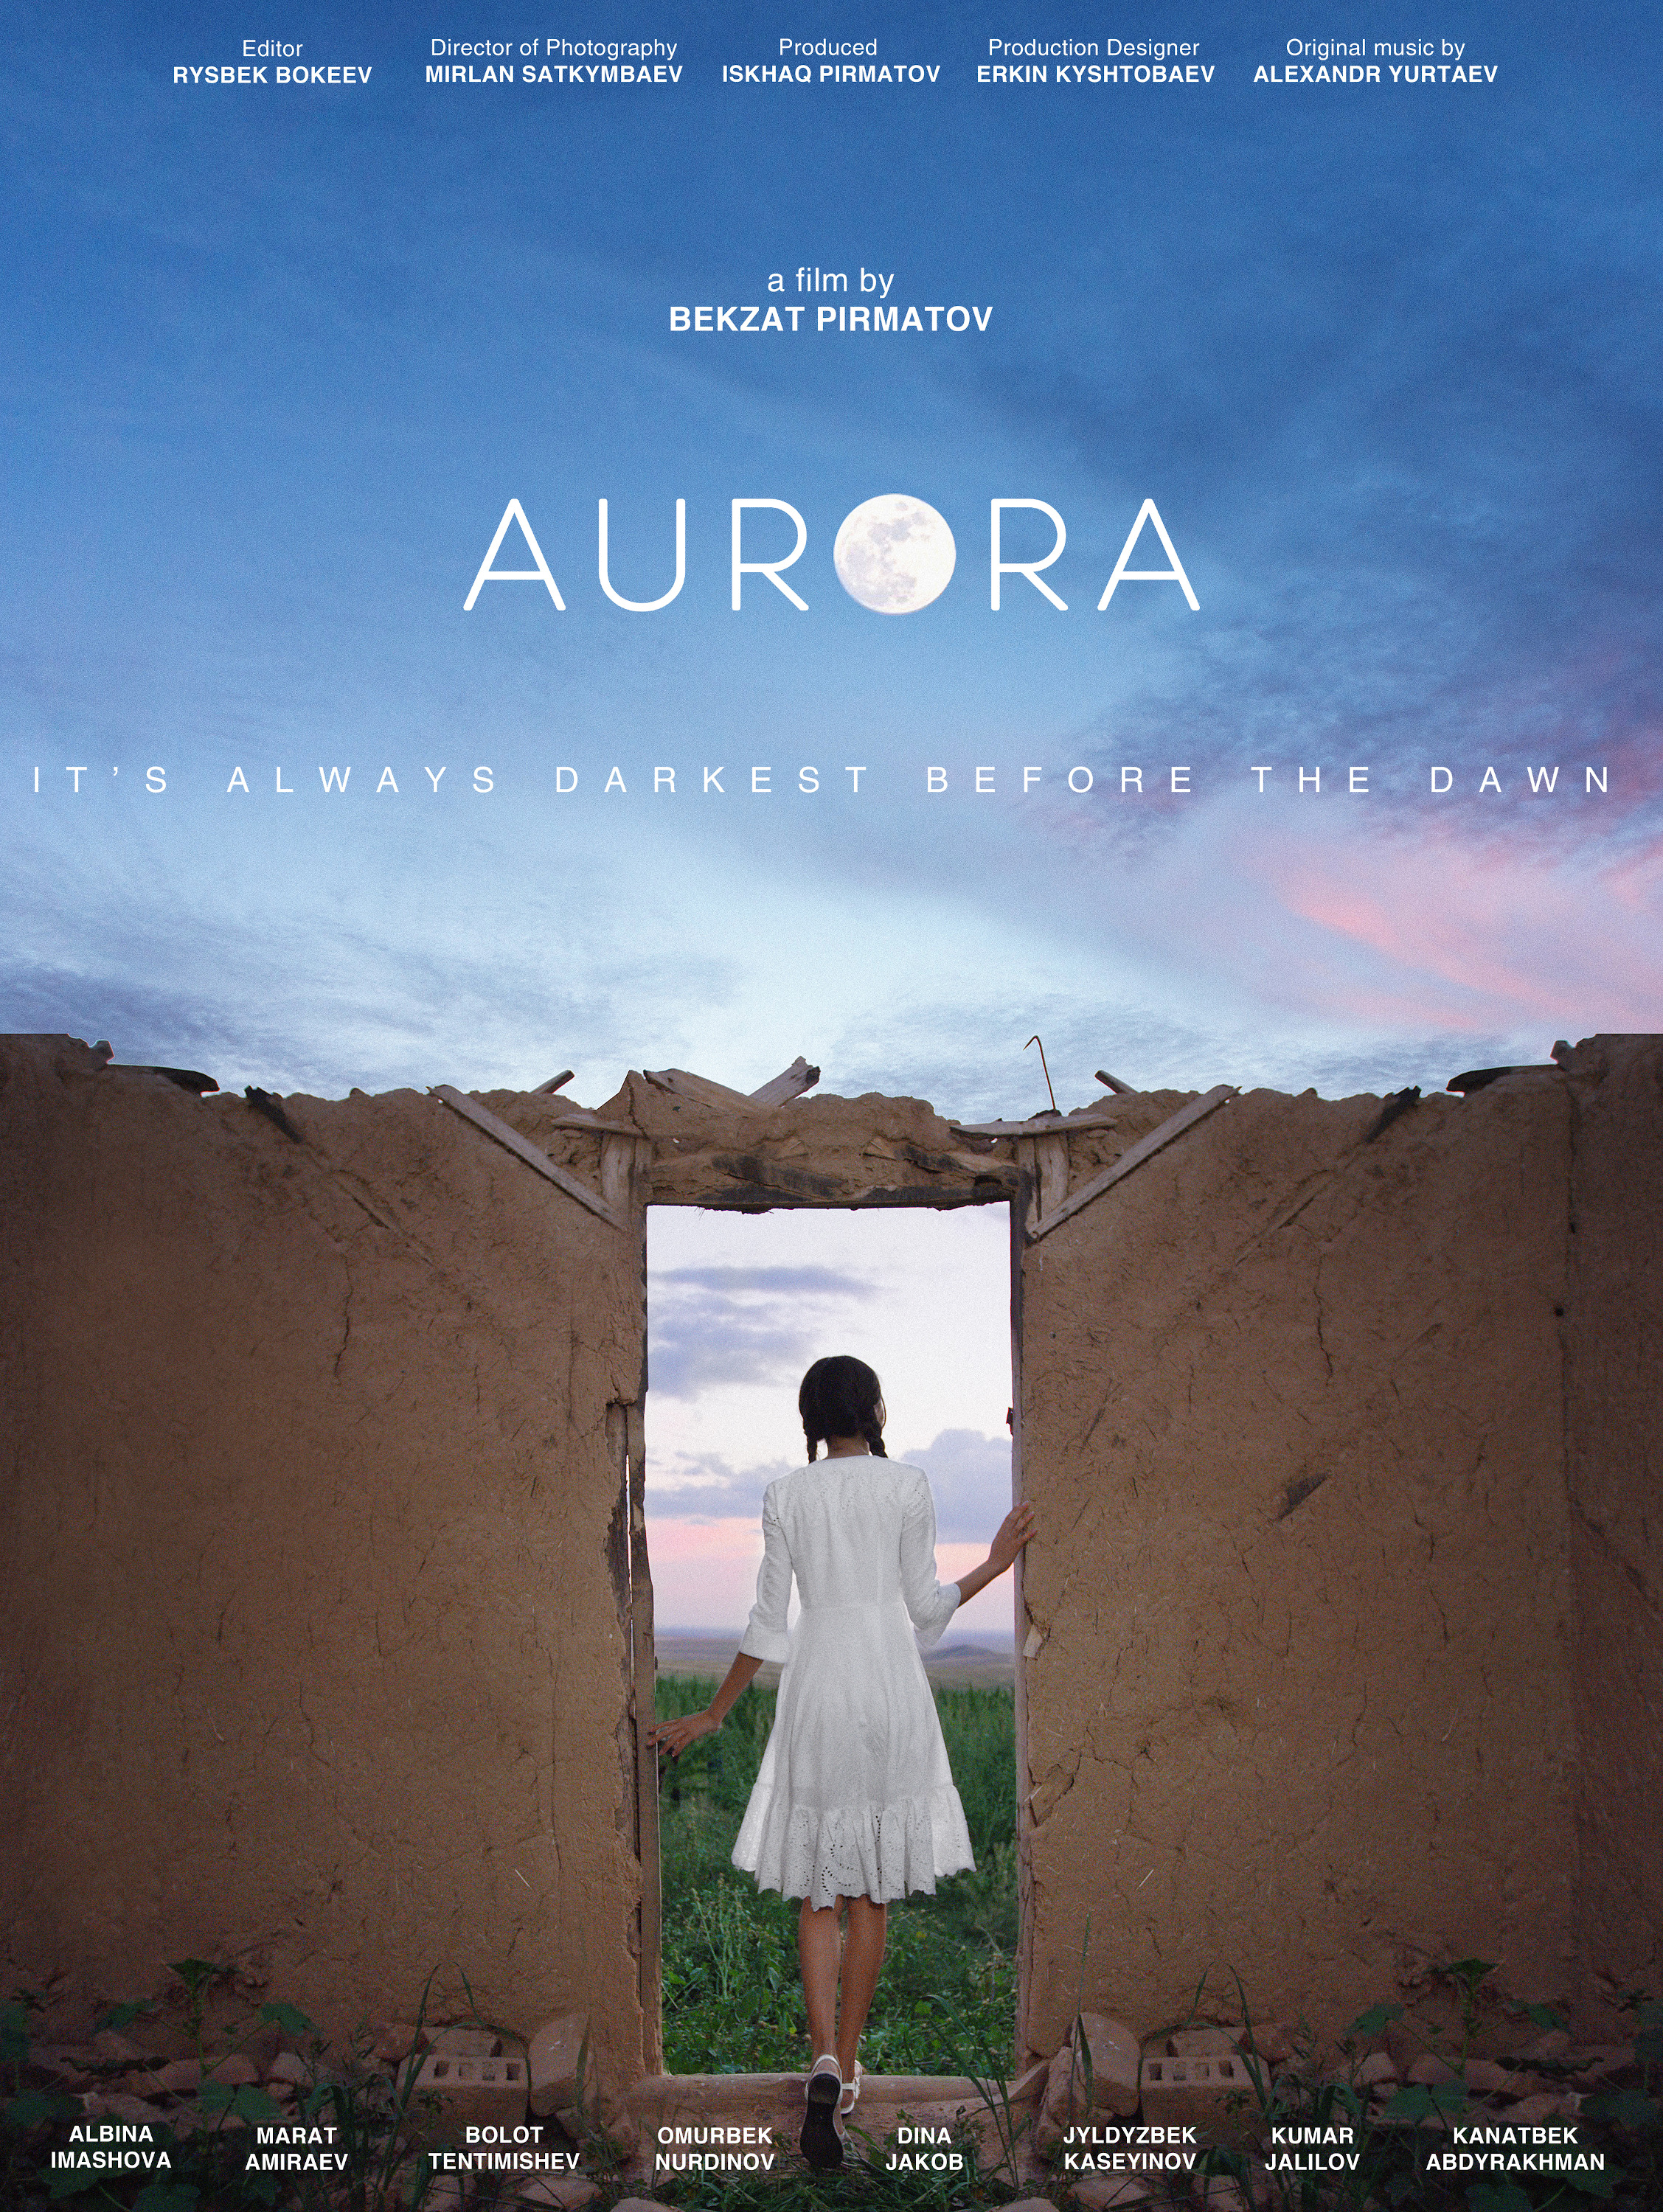 Mega Sized Movie Poster Image for Aurora 